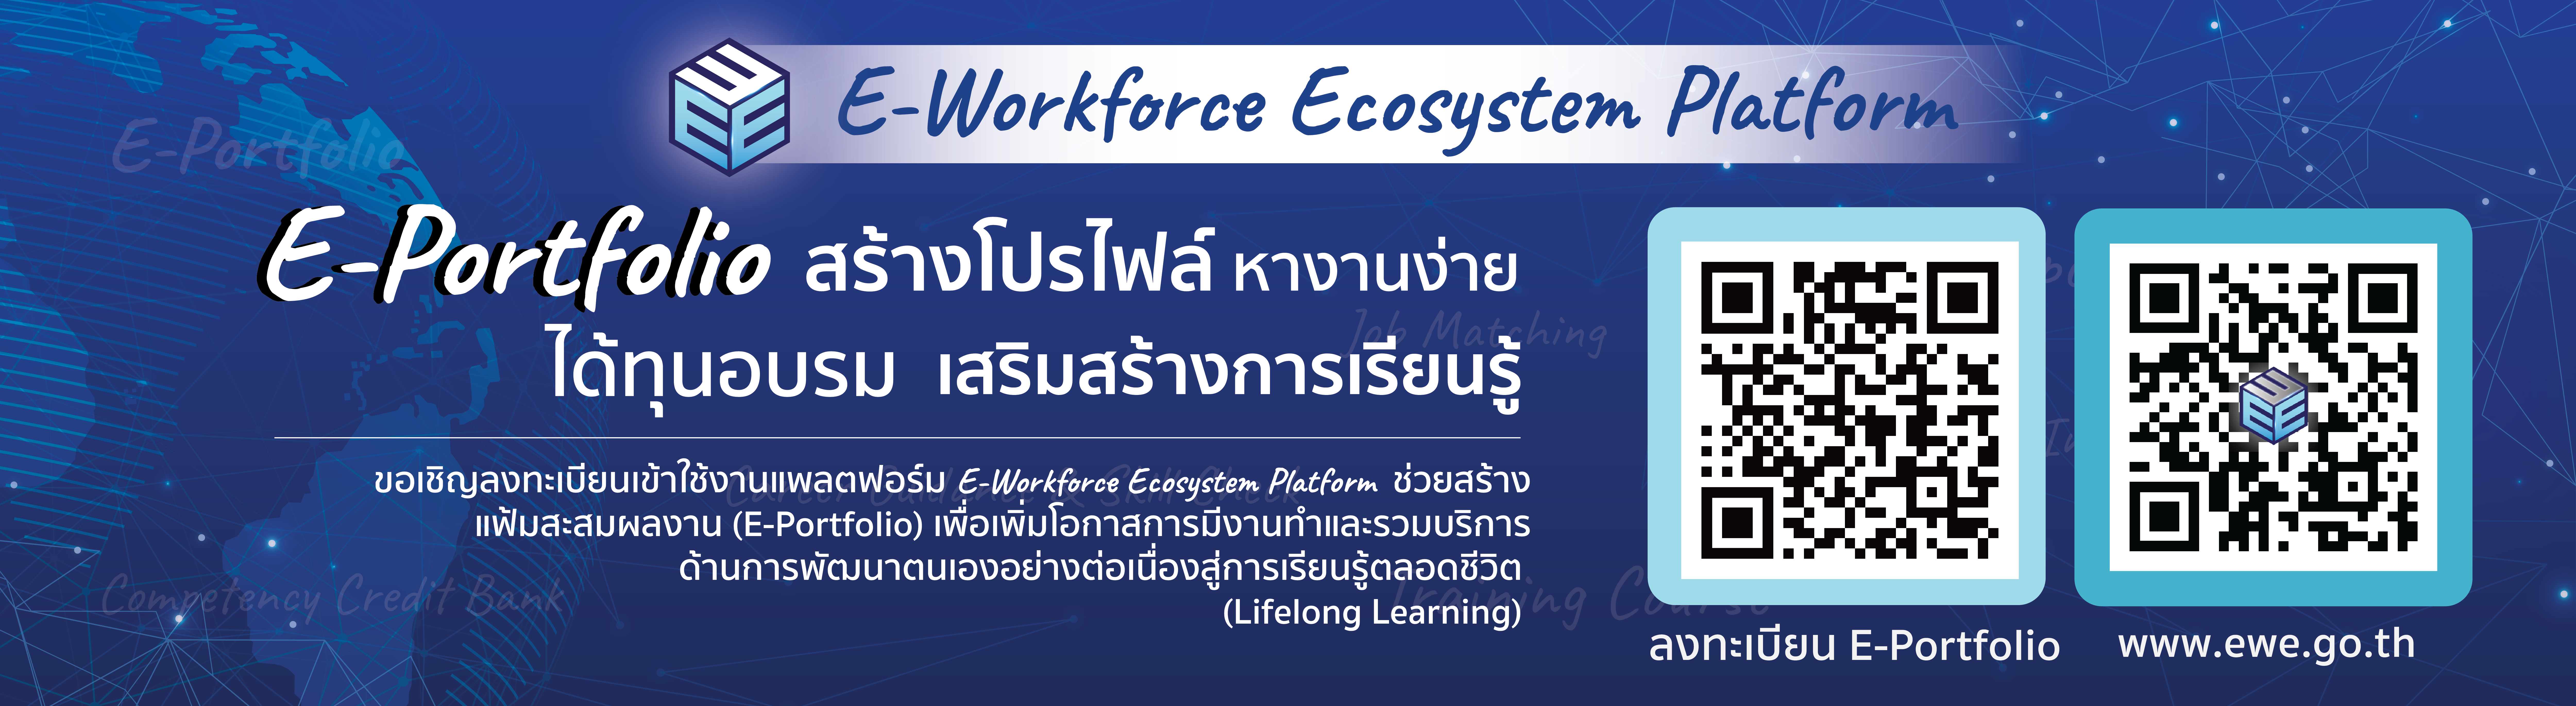 E-Workforce Ecosystem Platform (EWE Platform)